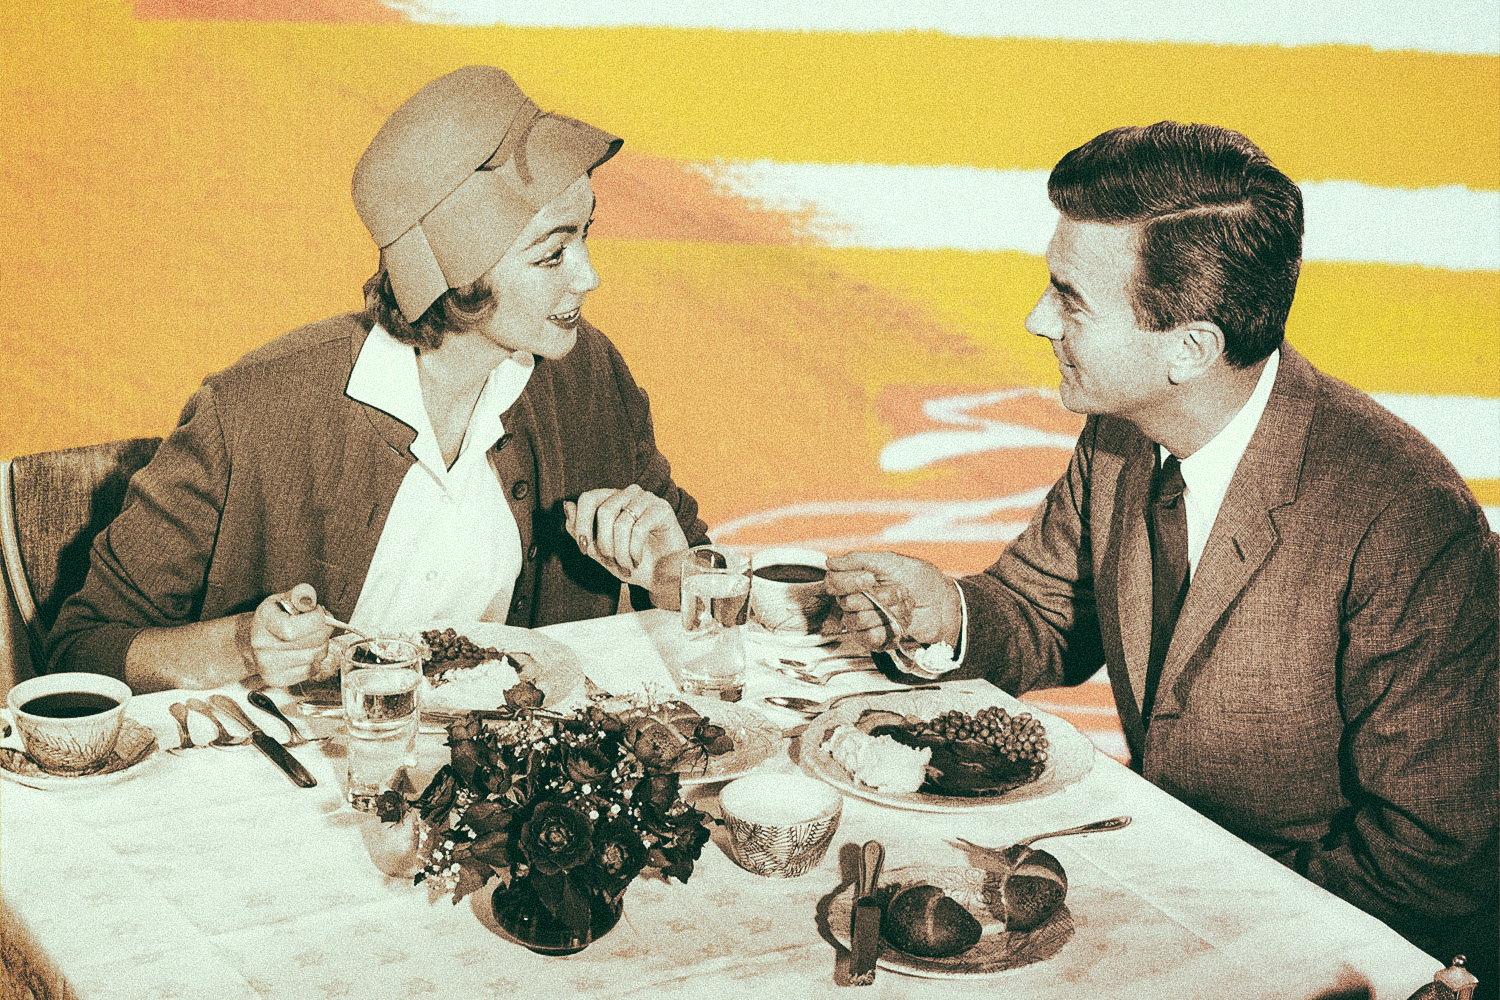 Black and white photos shows a circa-1920s couple at a restaurant